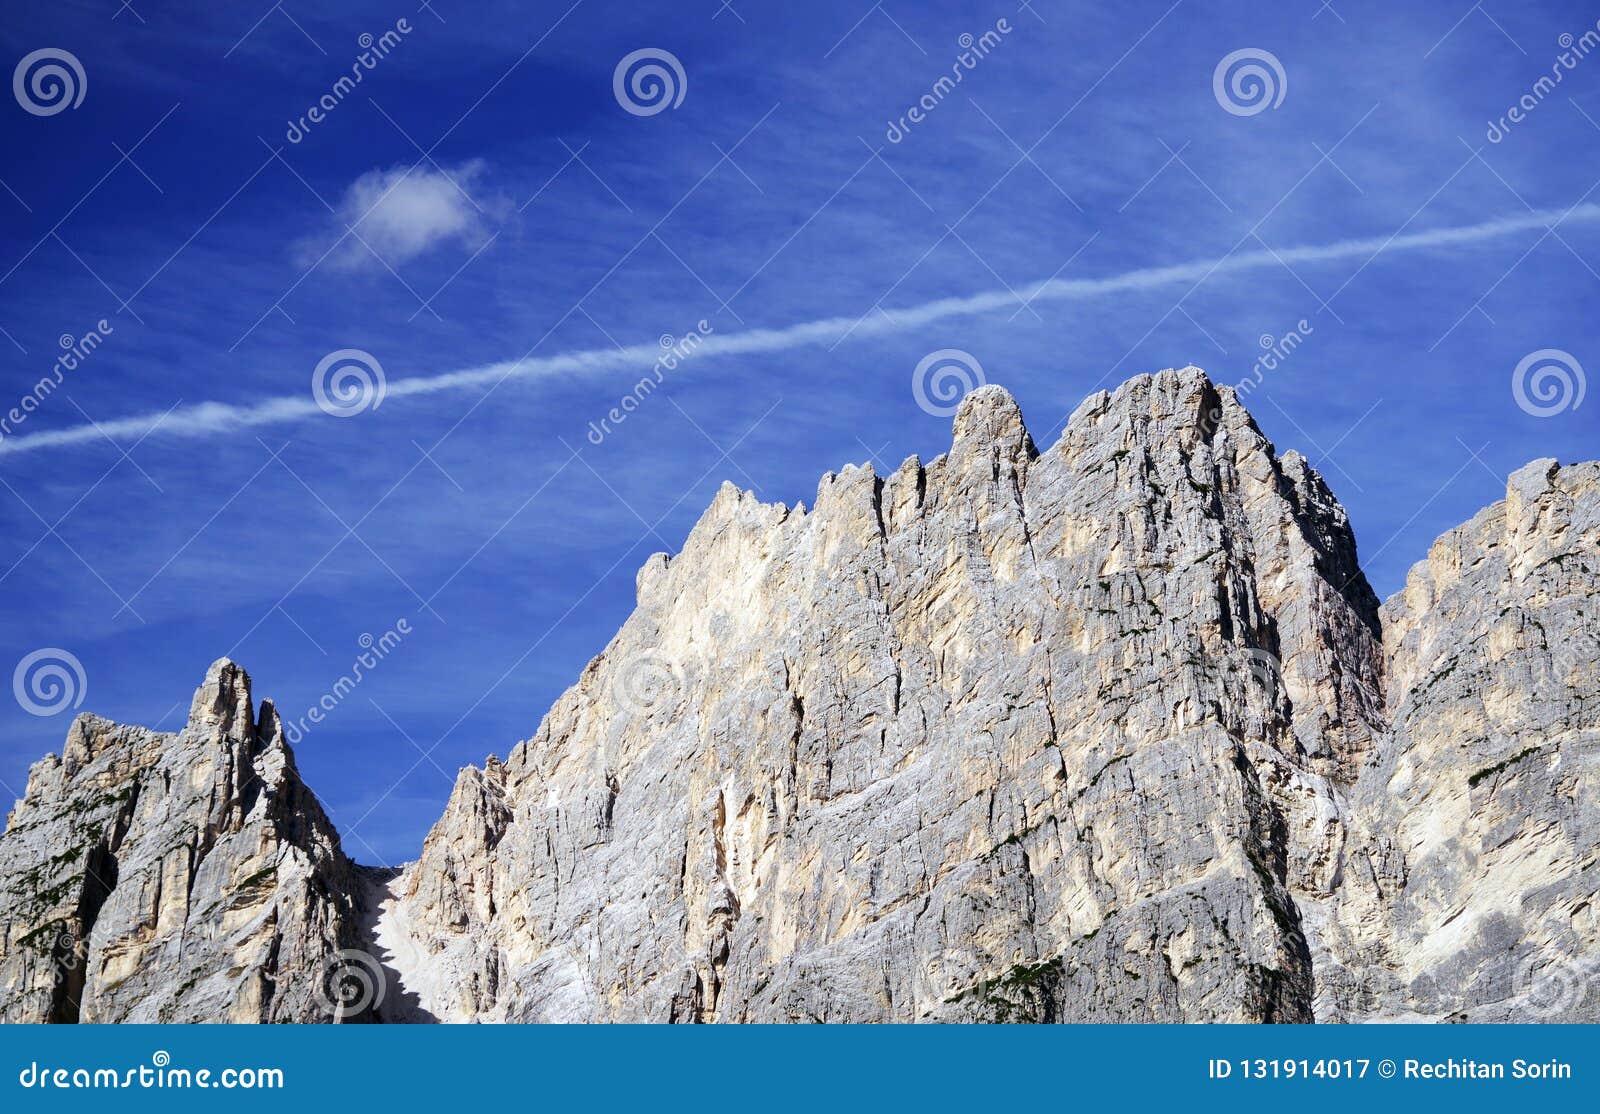 autumnal alpine landscape of monte cristallo.